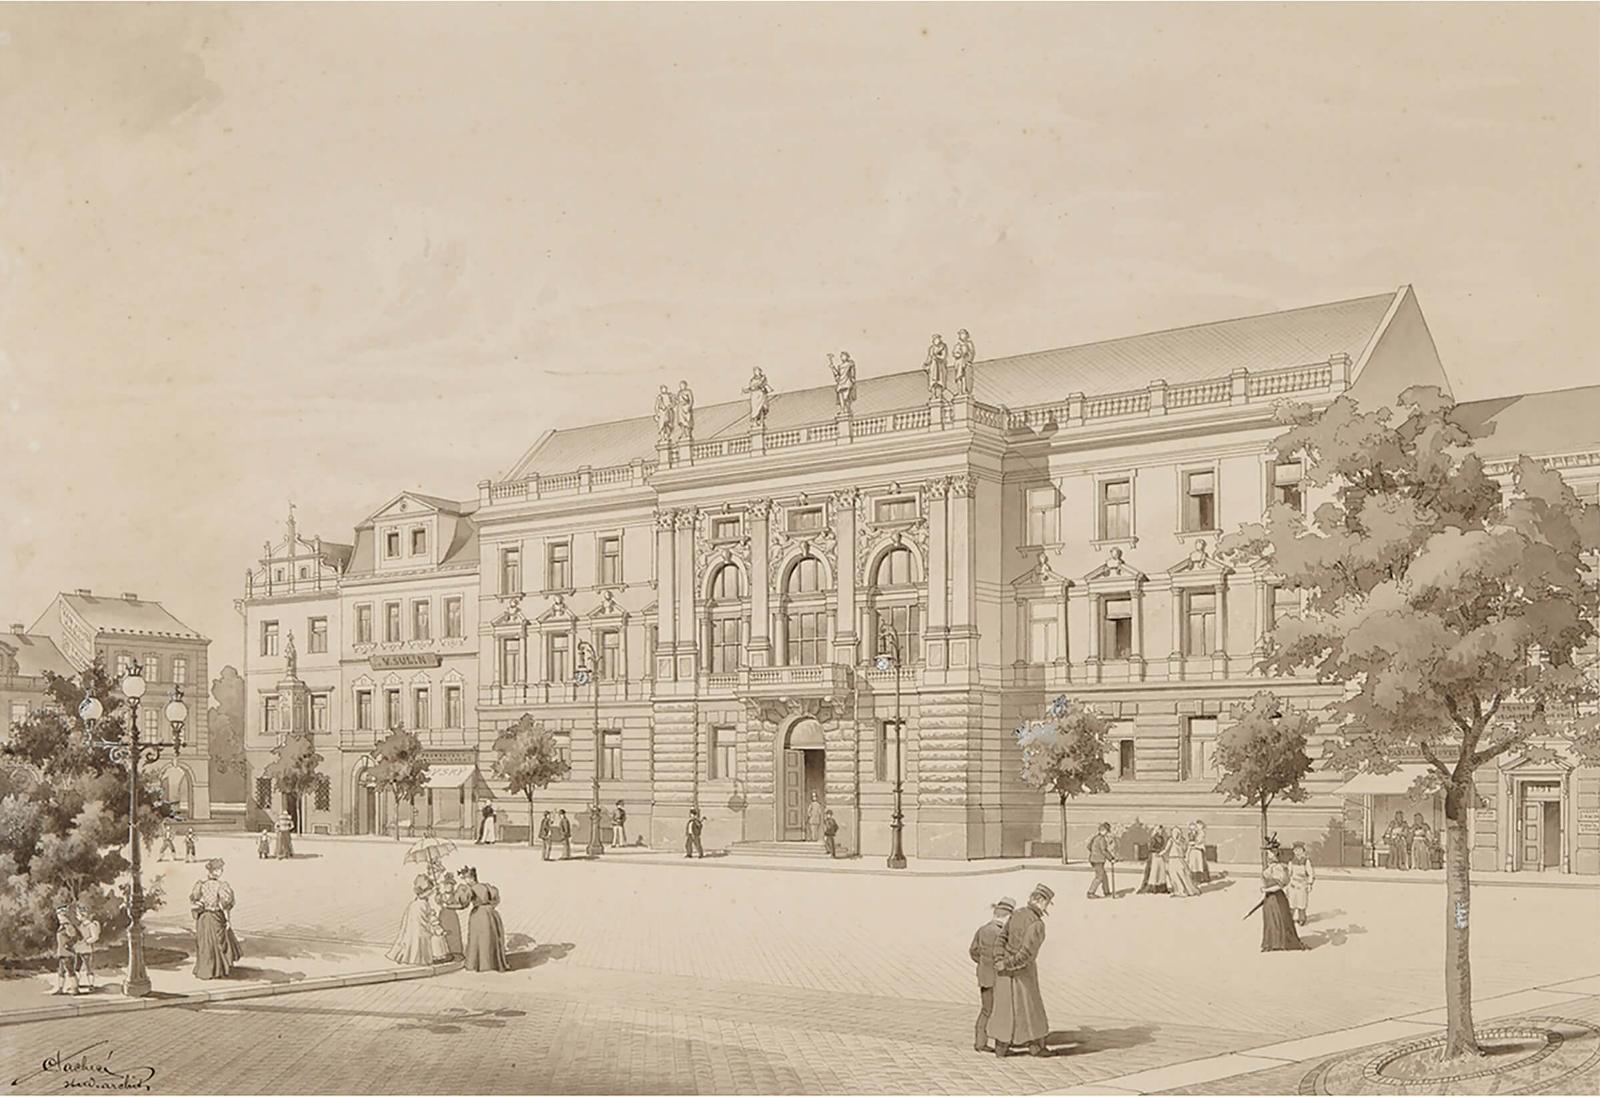 Lodovic Tacheci (1871) - Nymburk City Hall, Czech Republic (Architect Plans For The City Hall)